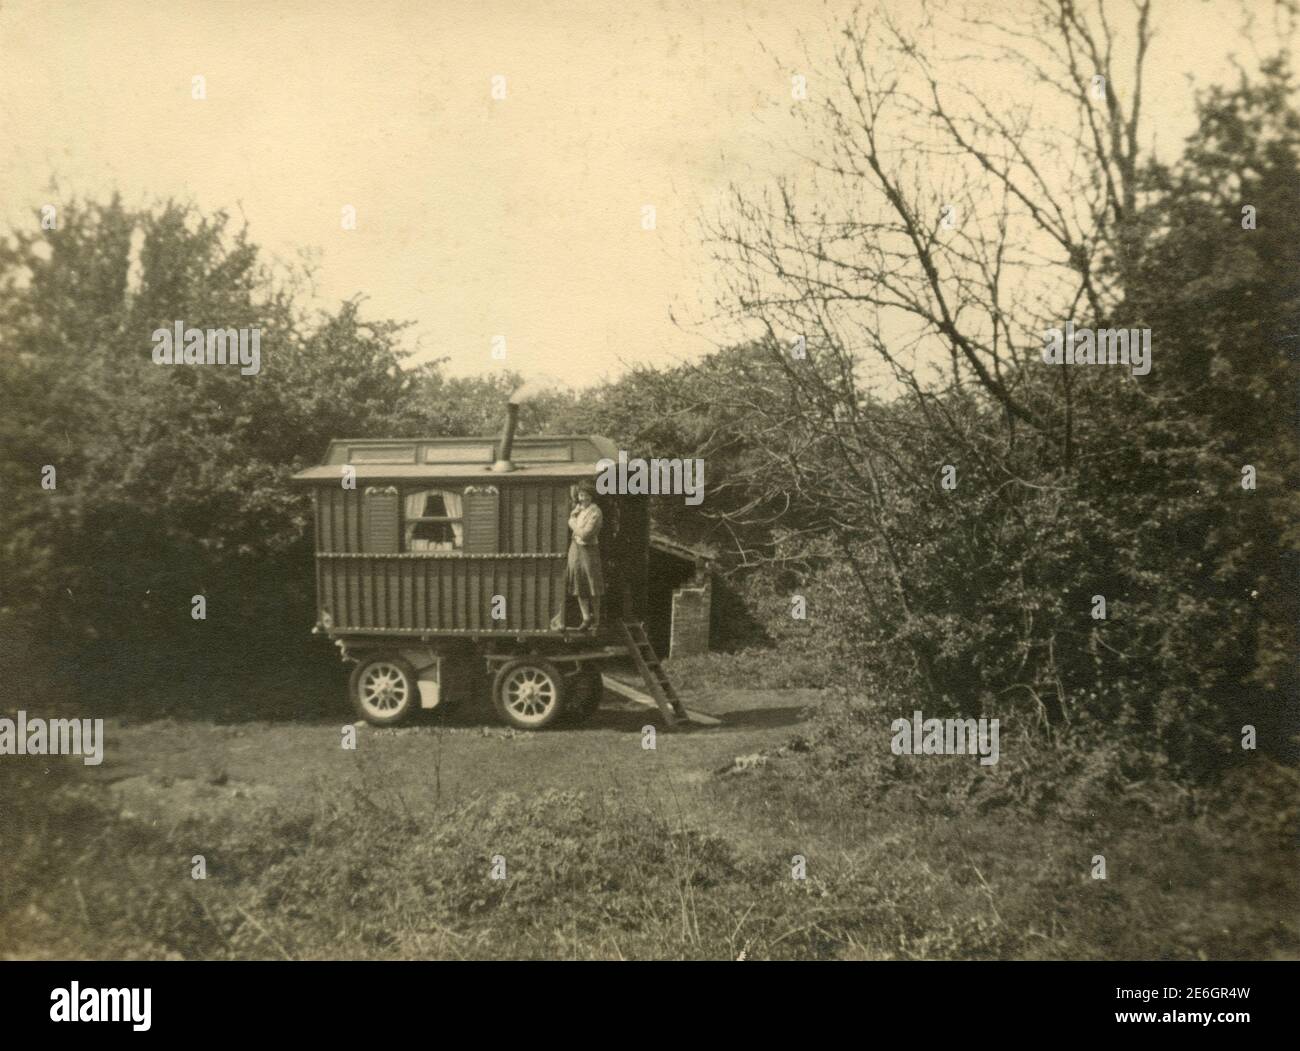 Caravana gitana estacionada en el campo, Italia 1930 Foto de stock